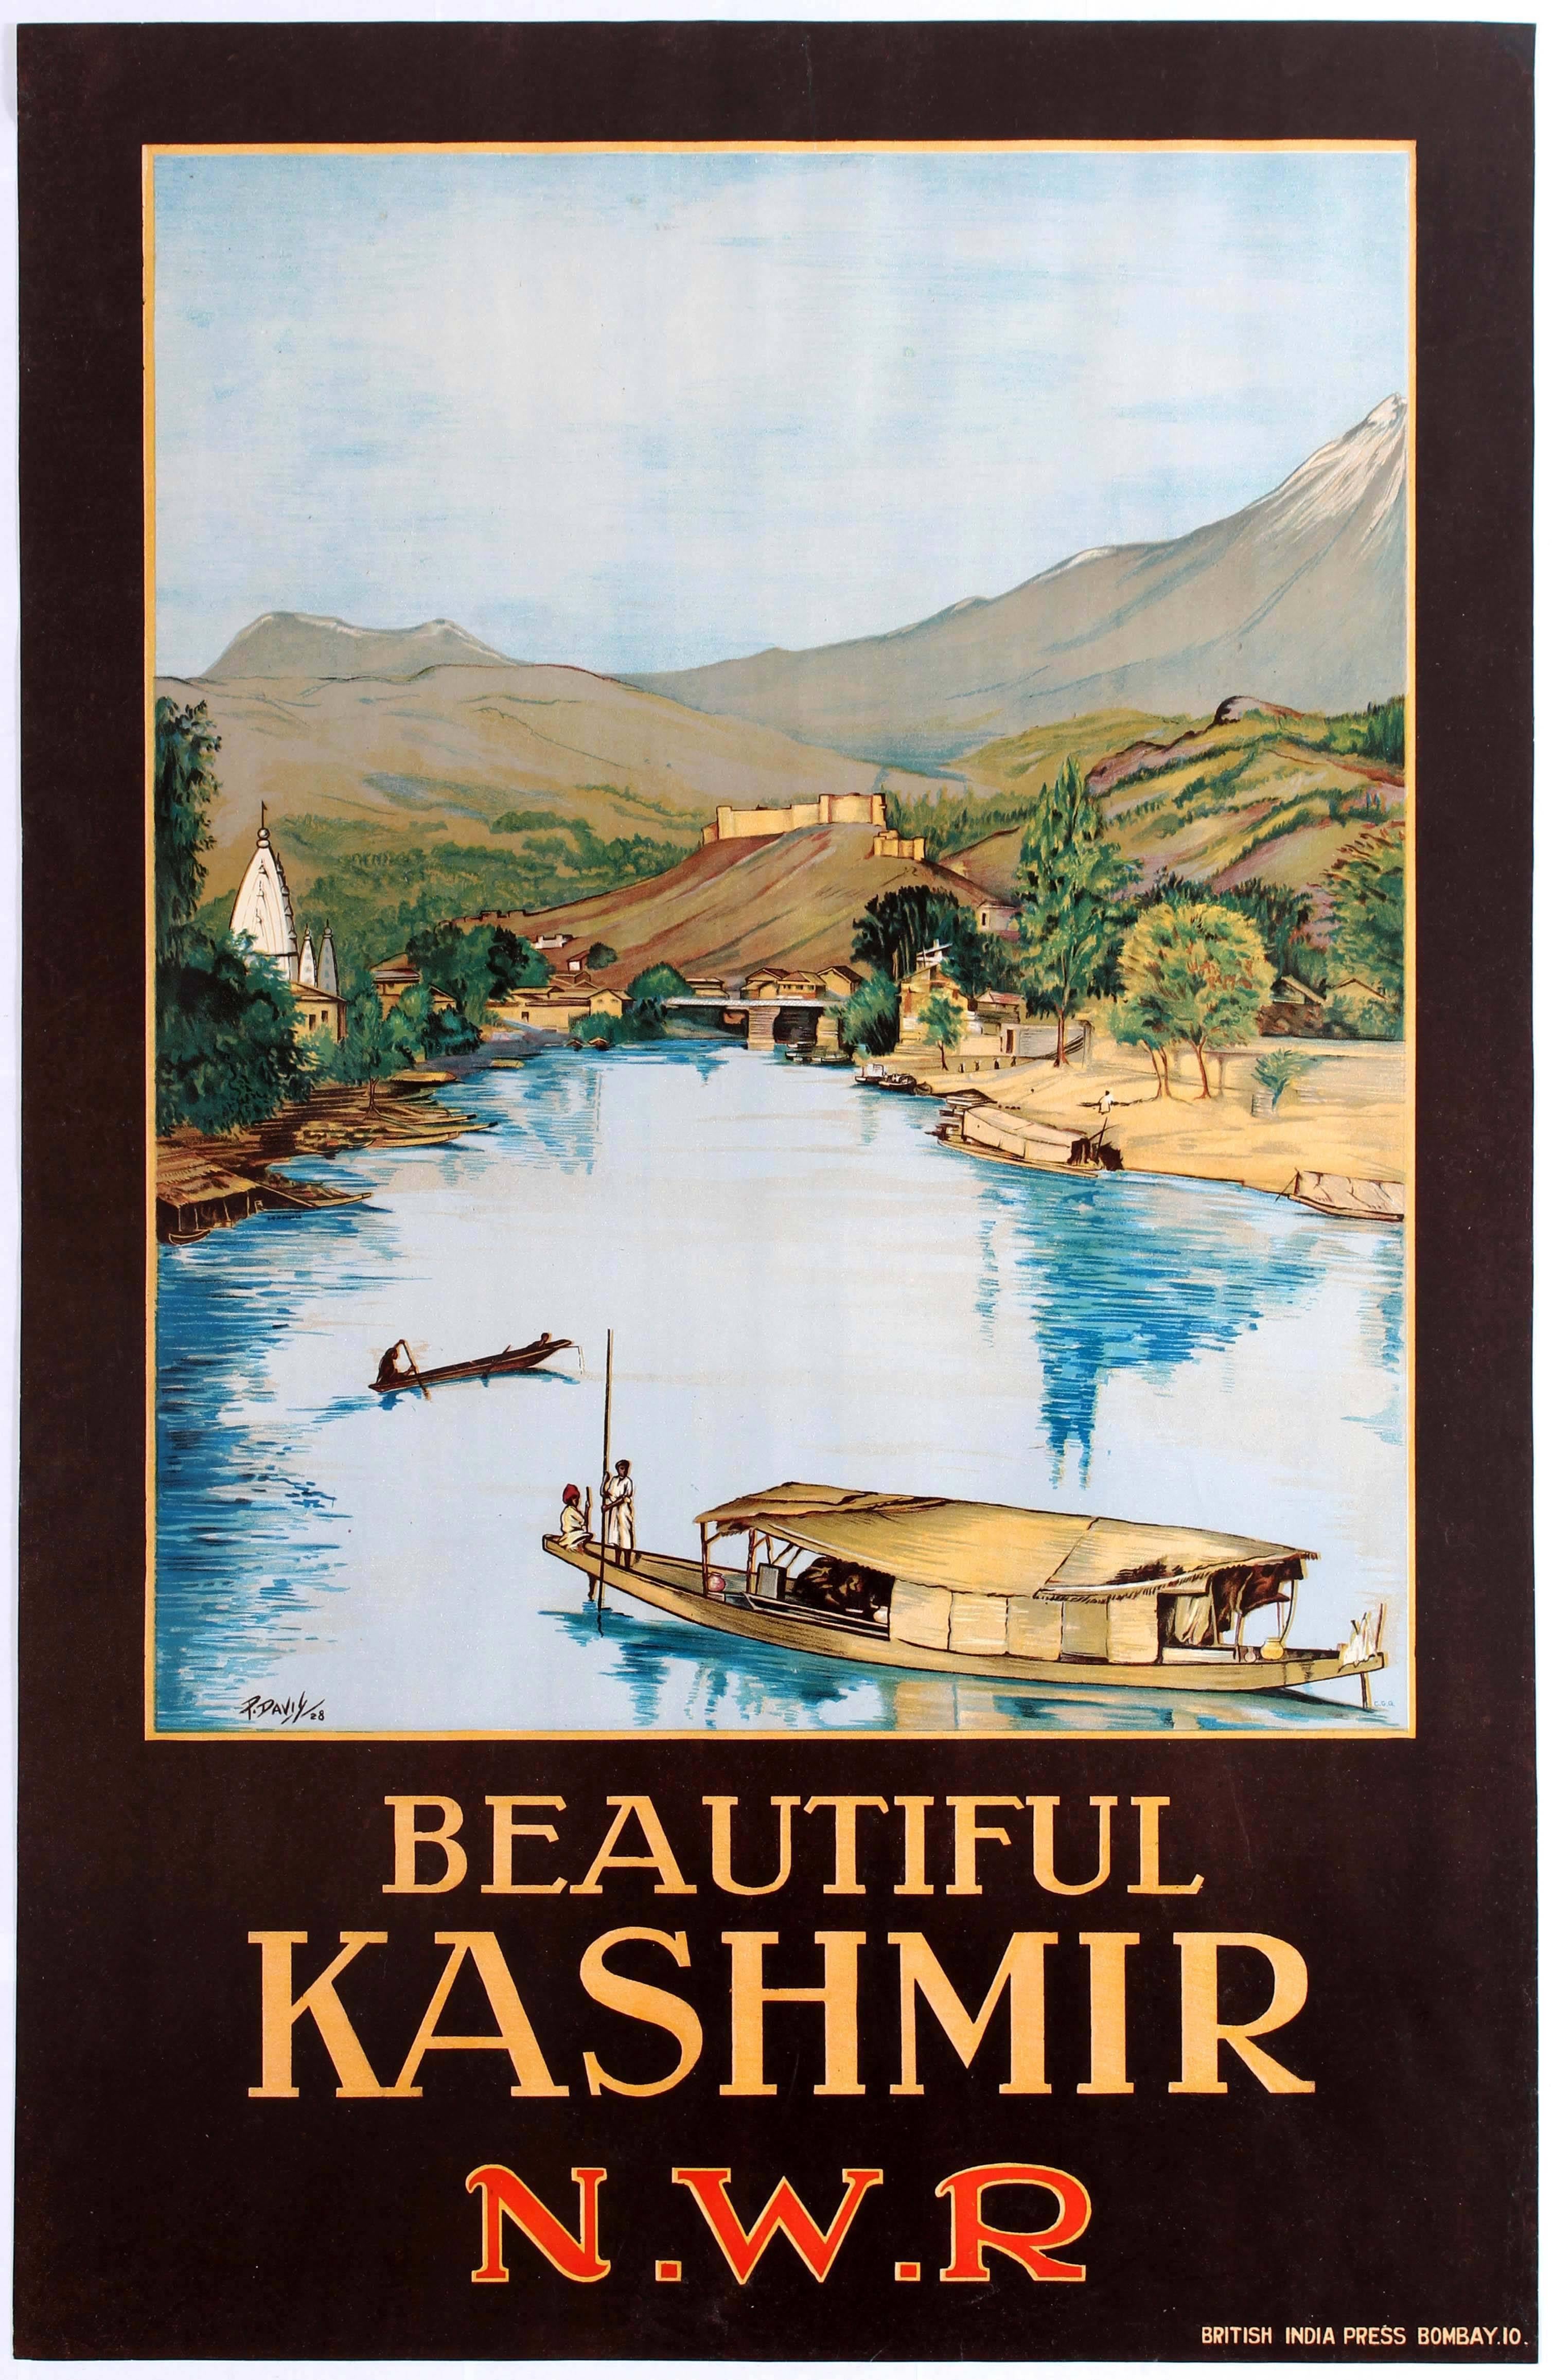 P. Davis Print - Original Vintage North Western Railway Travel Poster For Beautiful Kashmir N.W.R